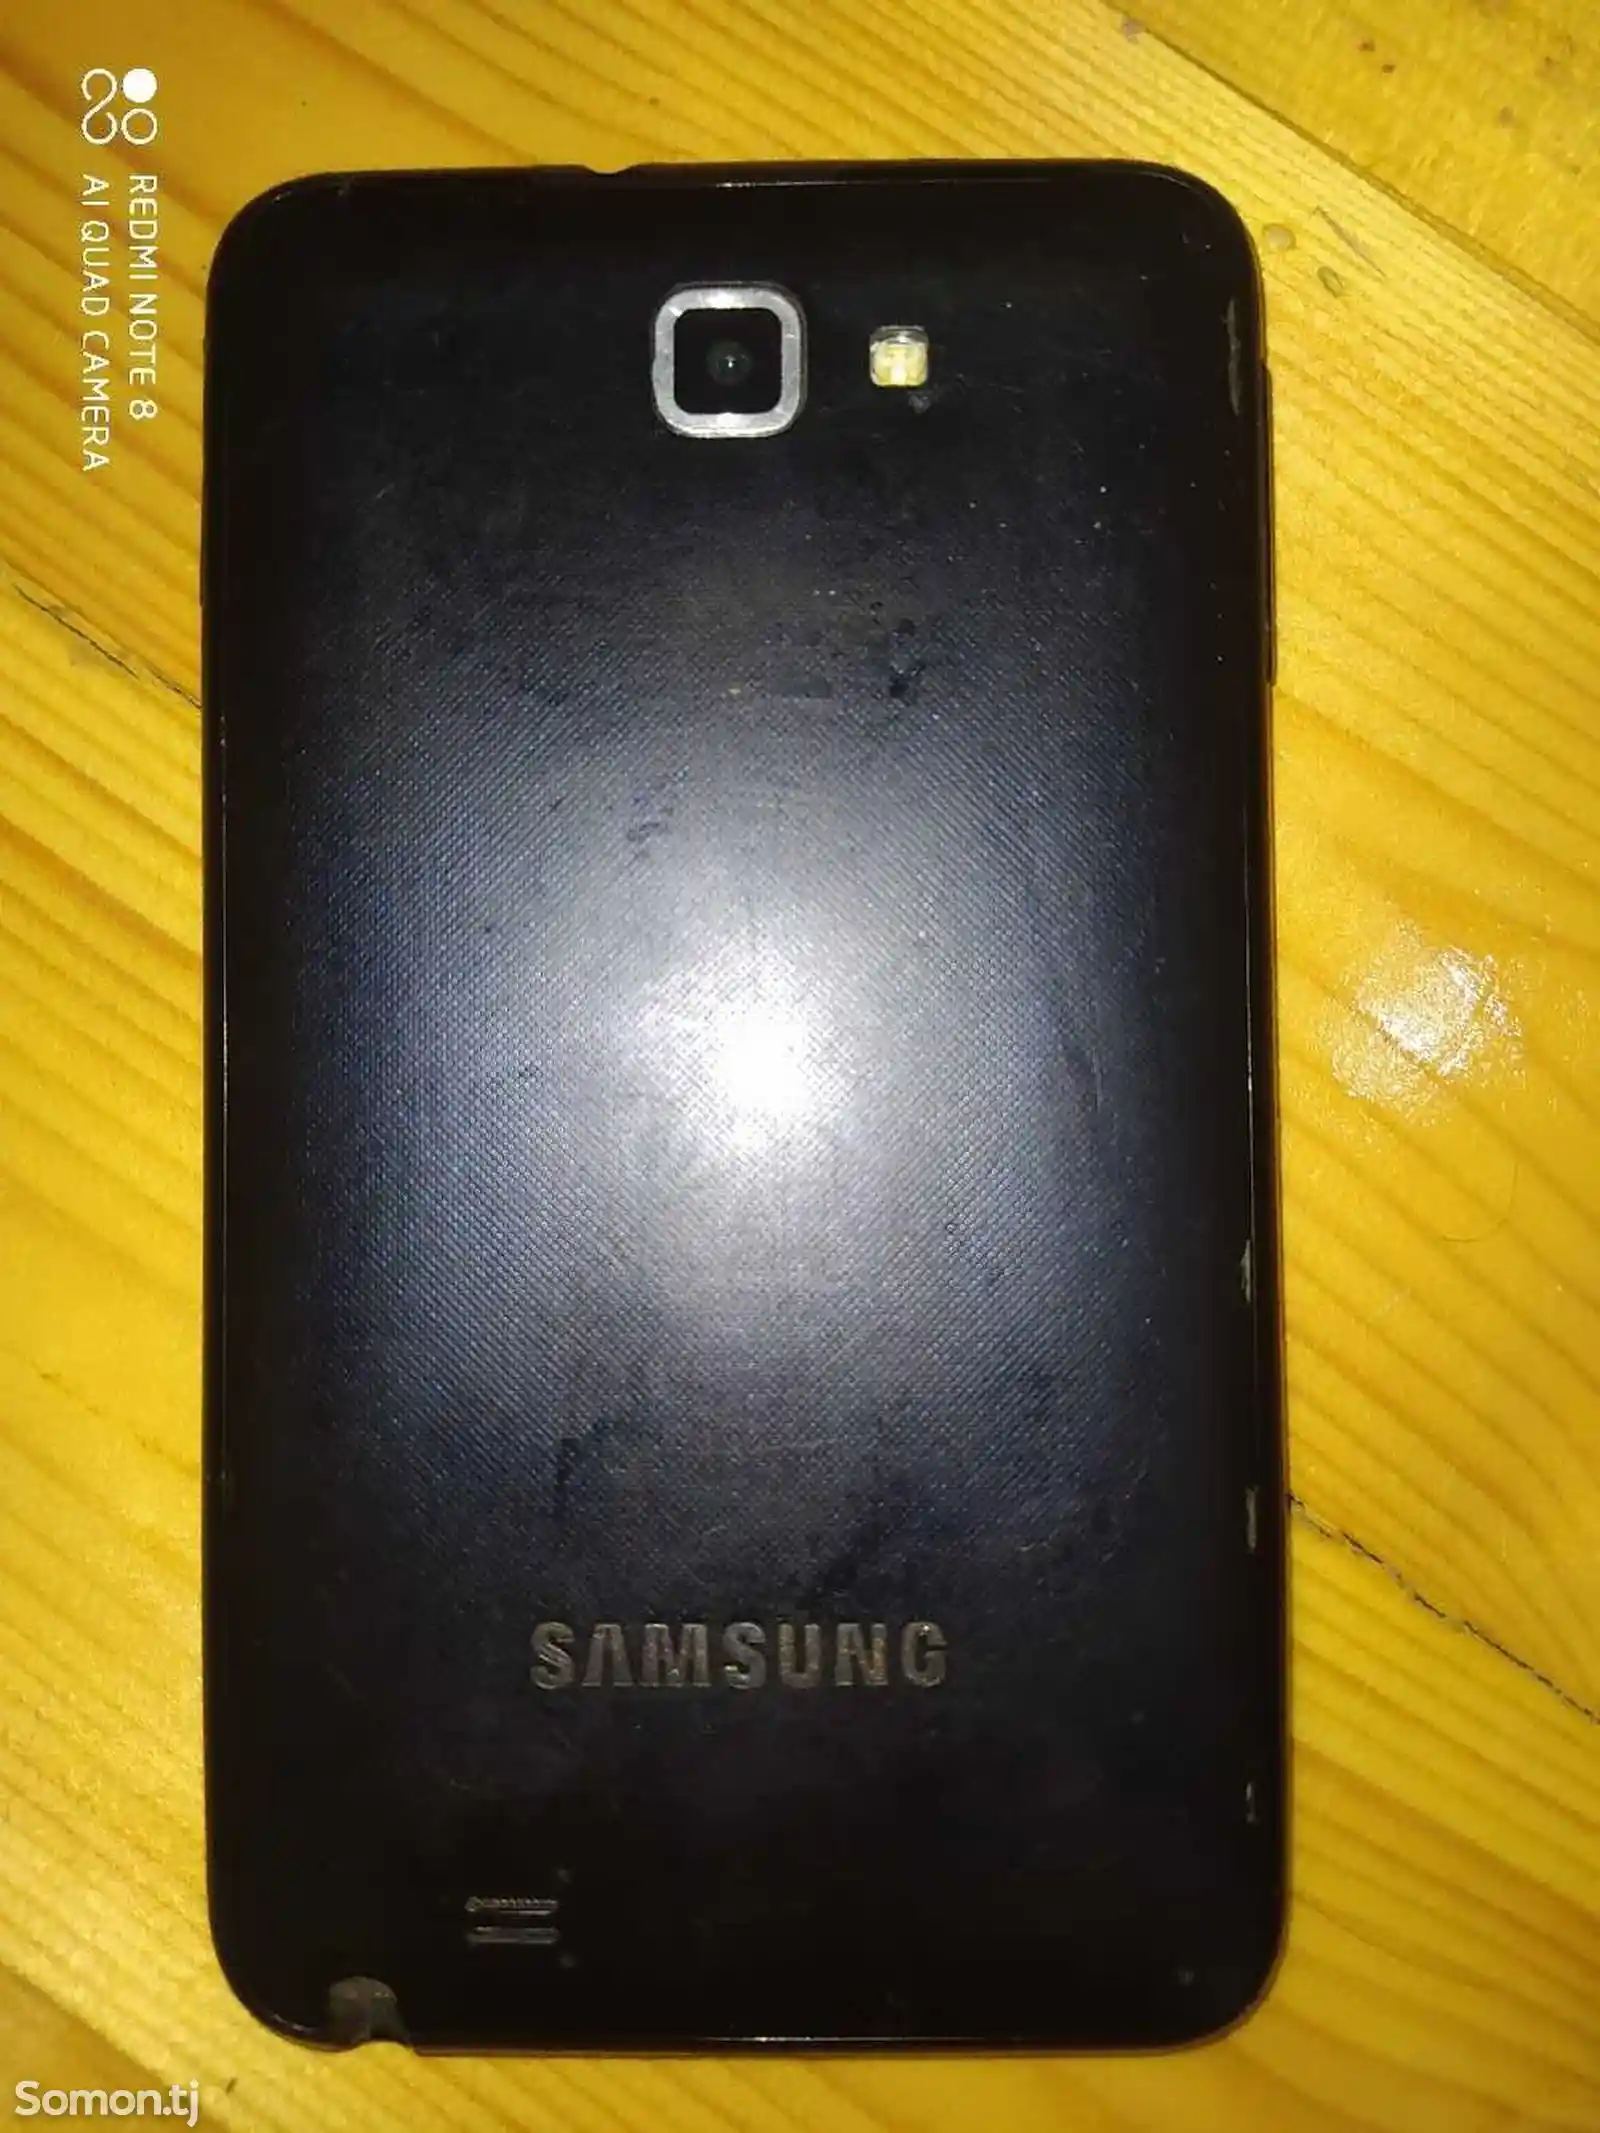 Samsung Galaxy Note 1-1